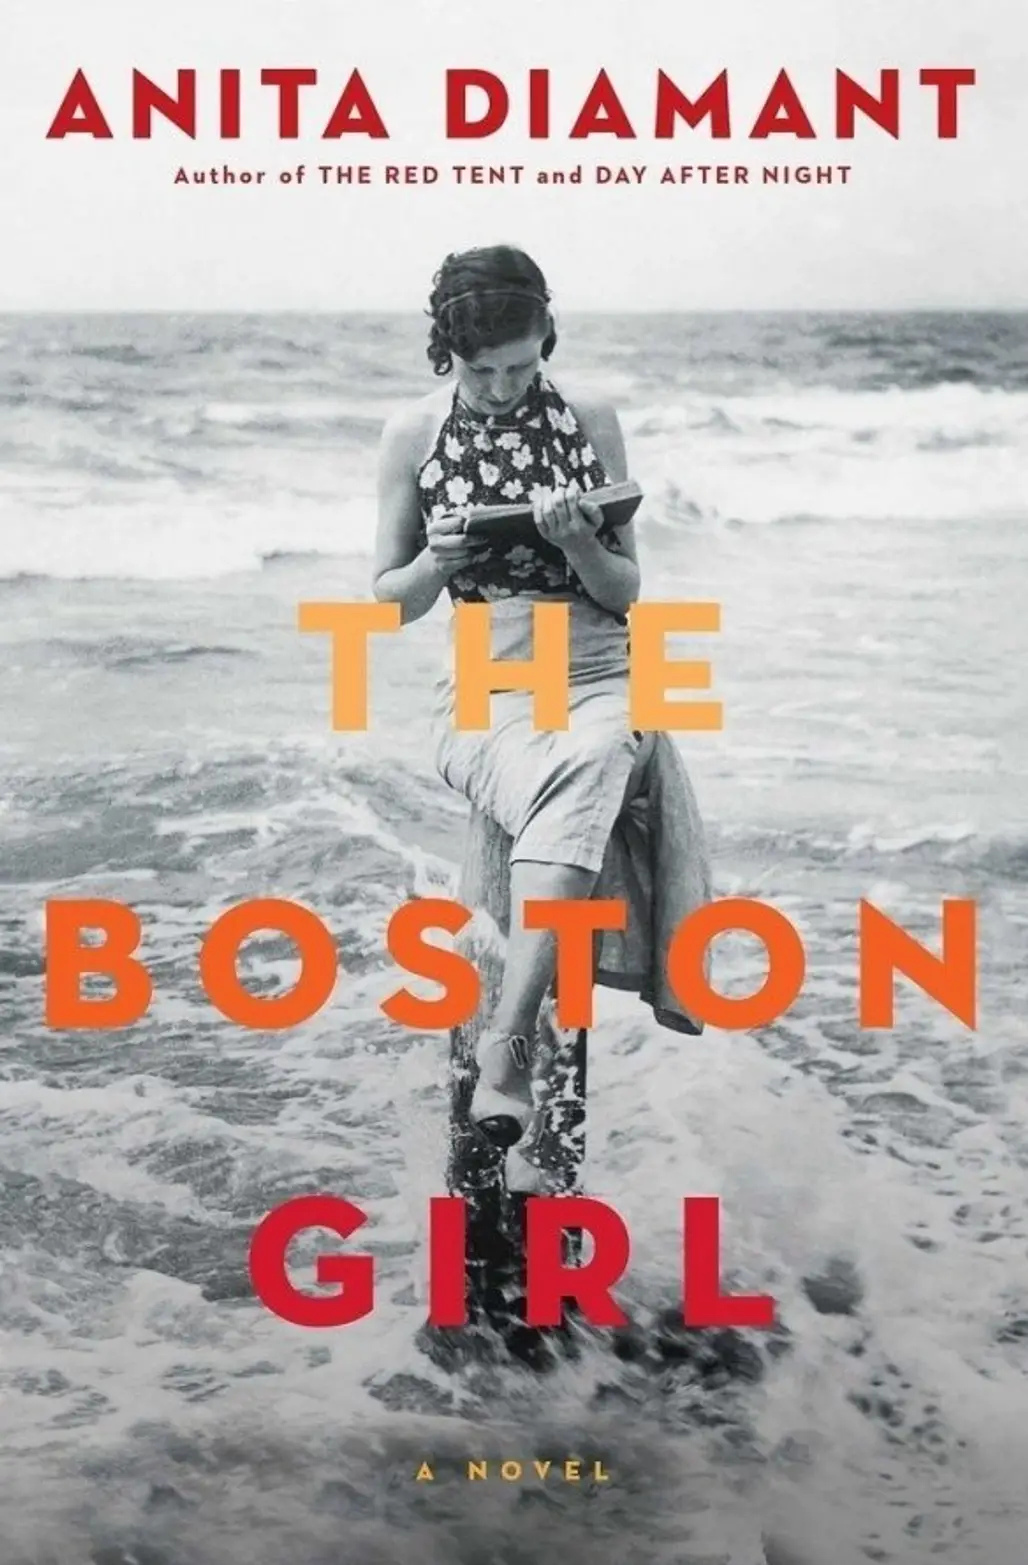 “the Boston Girl”